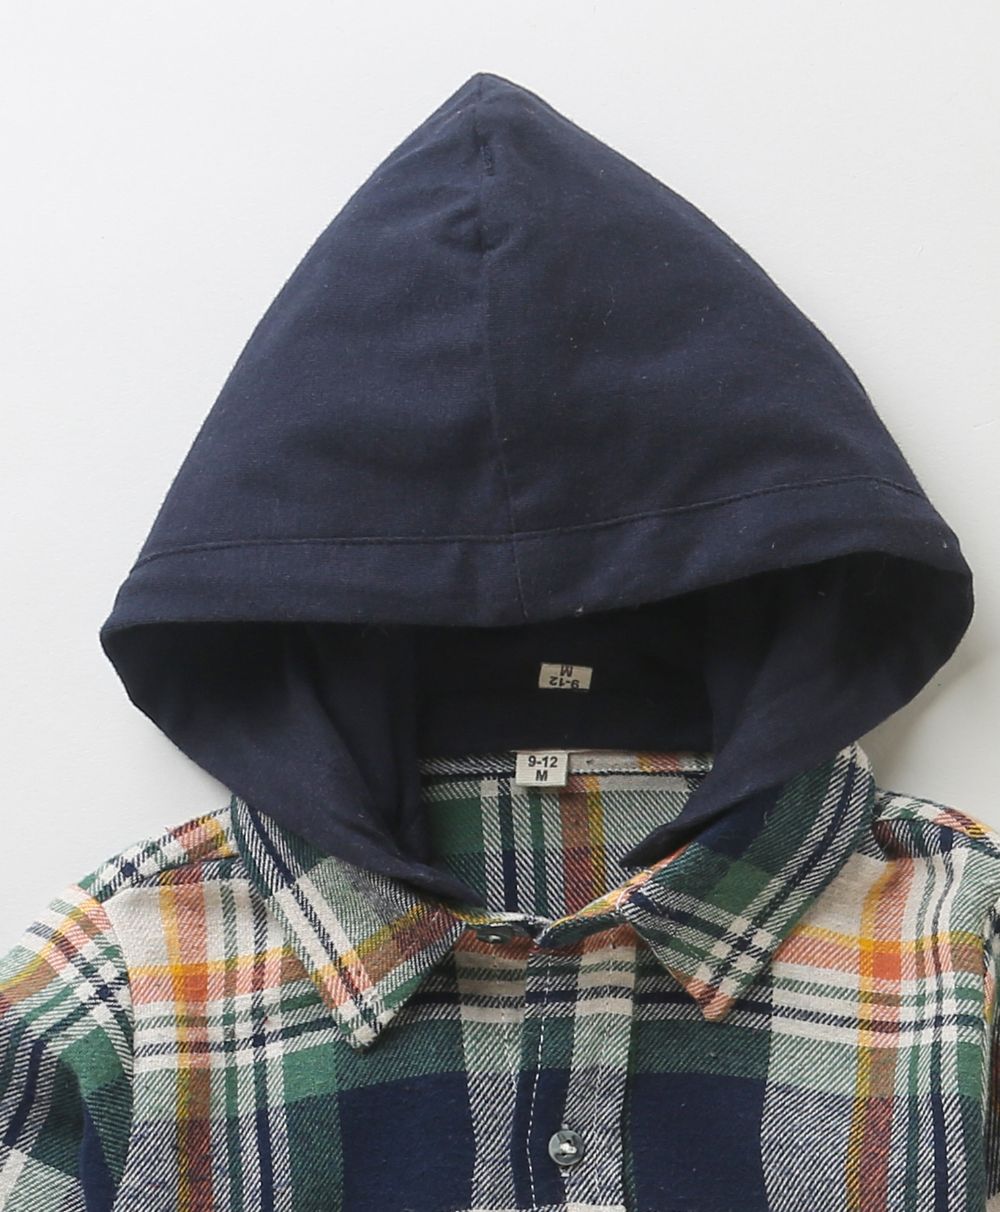 Multicoloured Checks Cotton Flannel Hoodie Long Sleeve Shirt - detachable hoodie